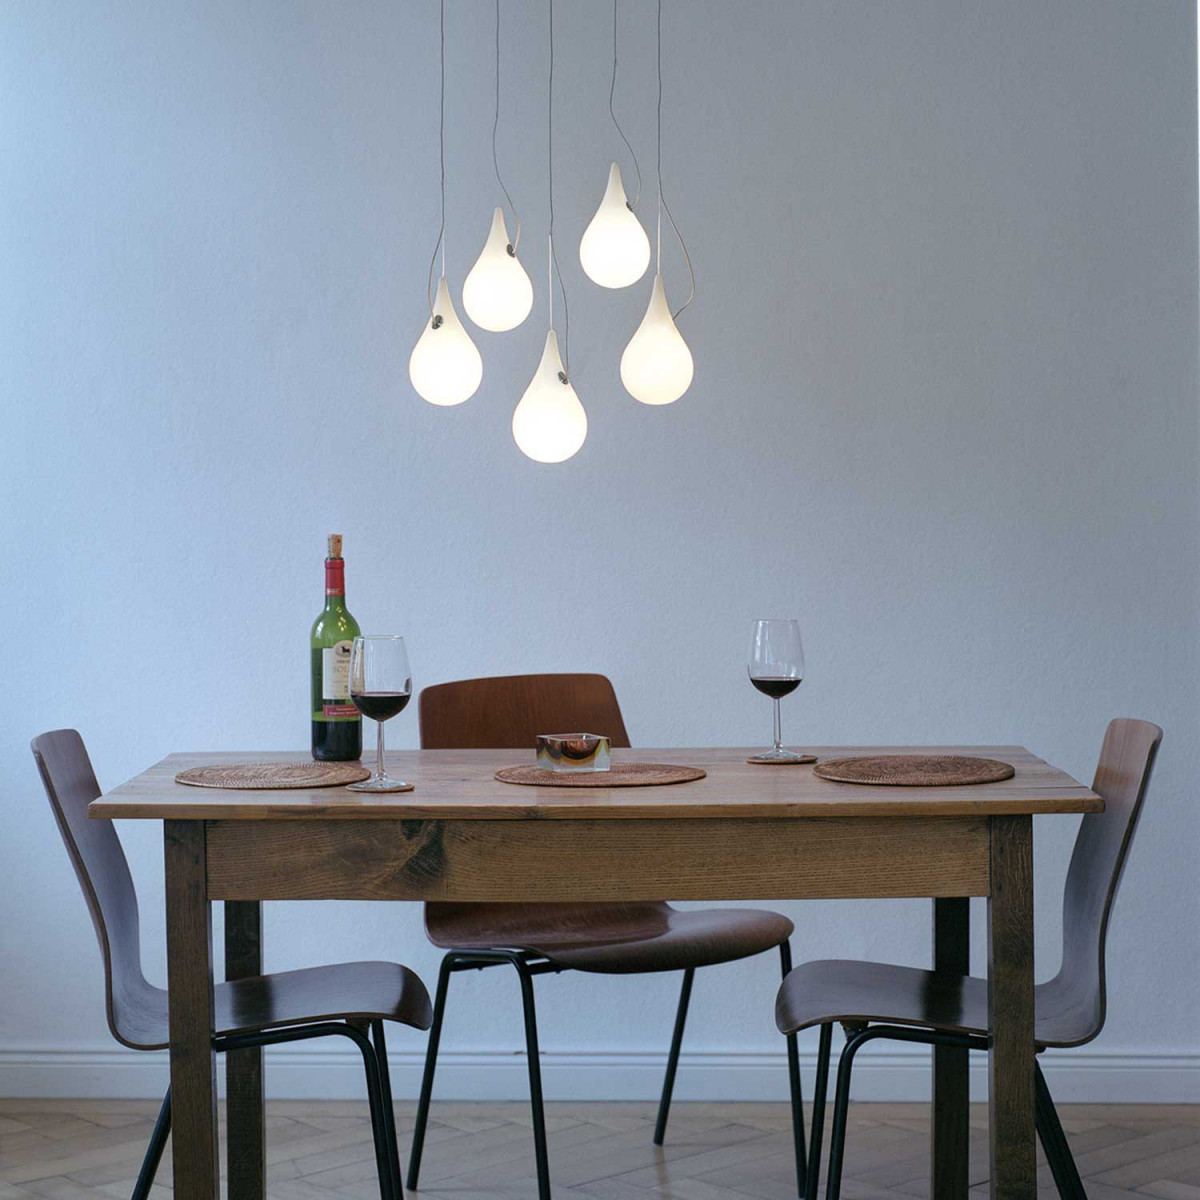 2 Xs 5 Cer Pendant Light Lampefeber, 2 Pendant Lights Over Dining Room Table